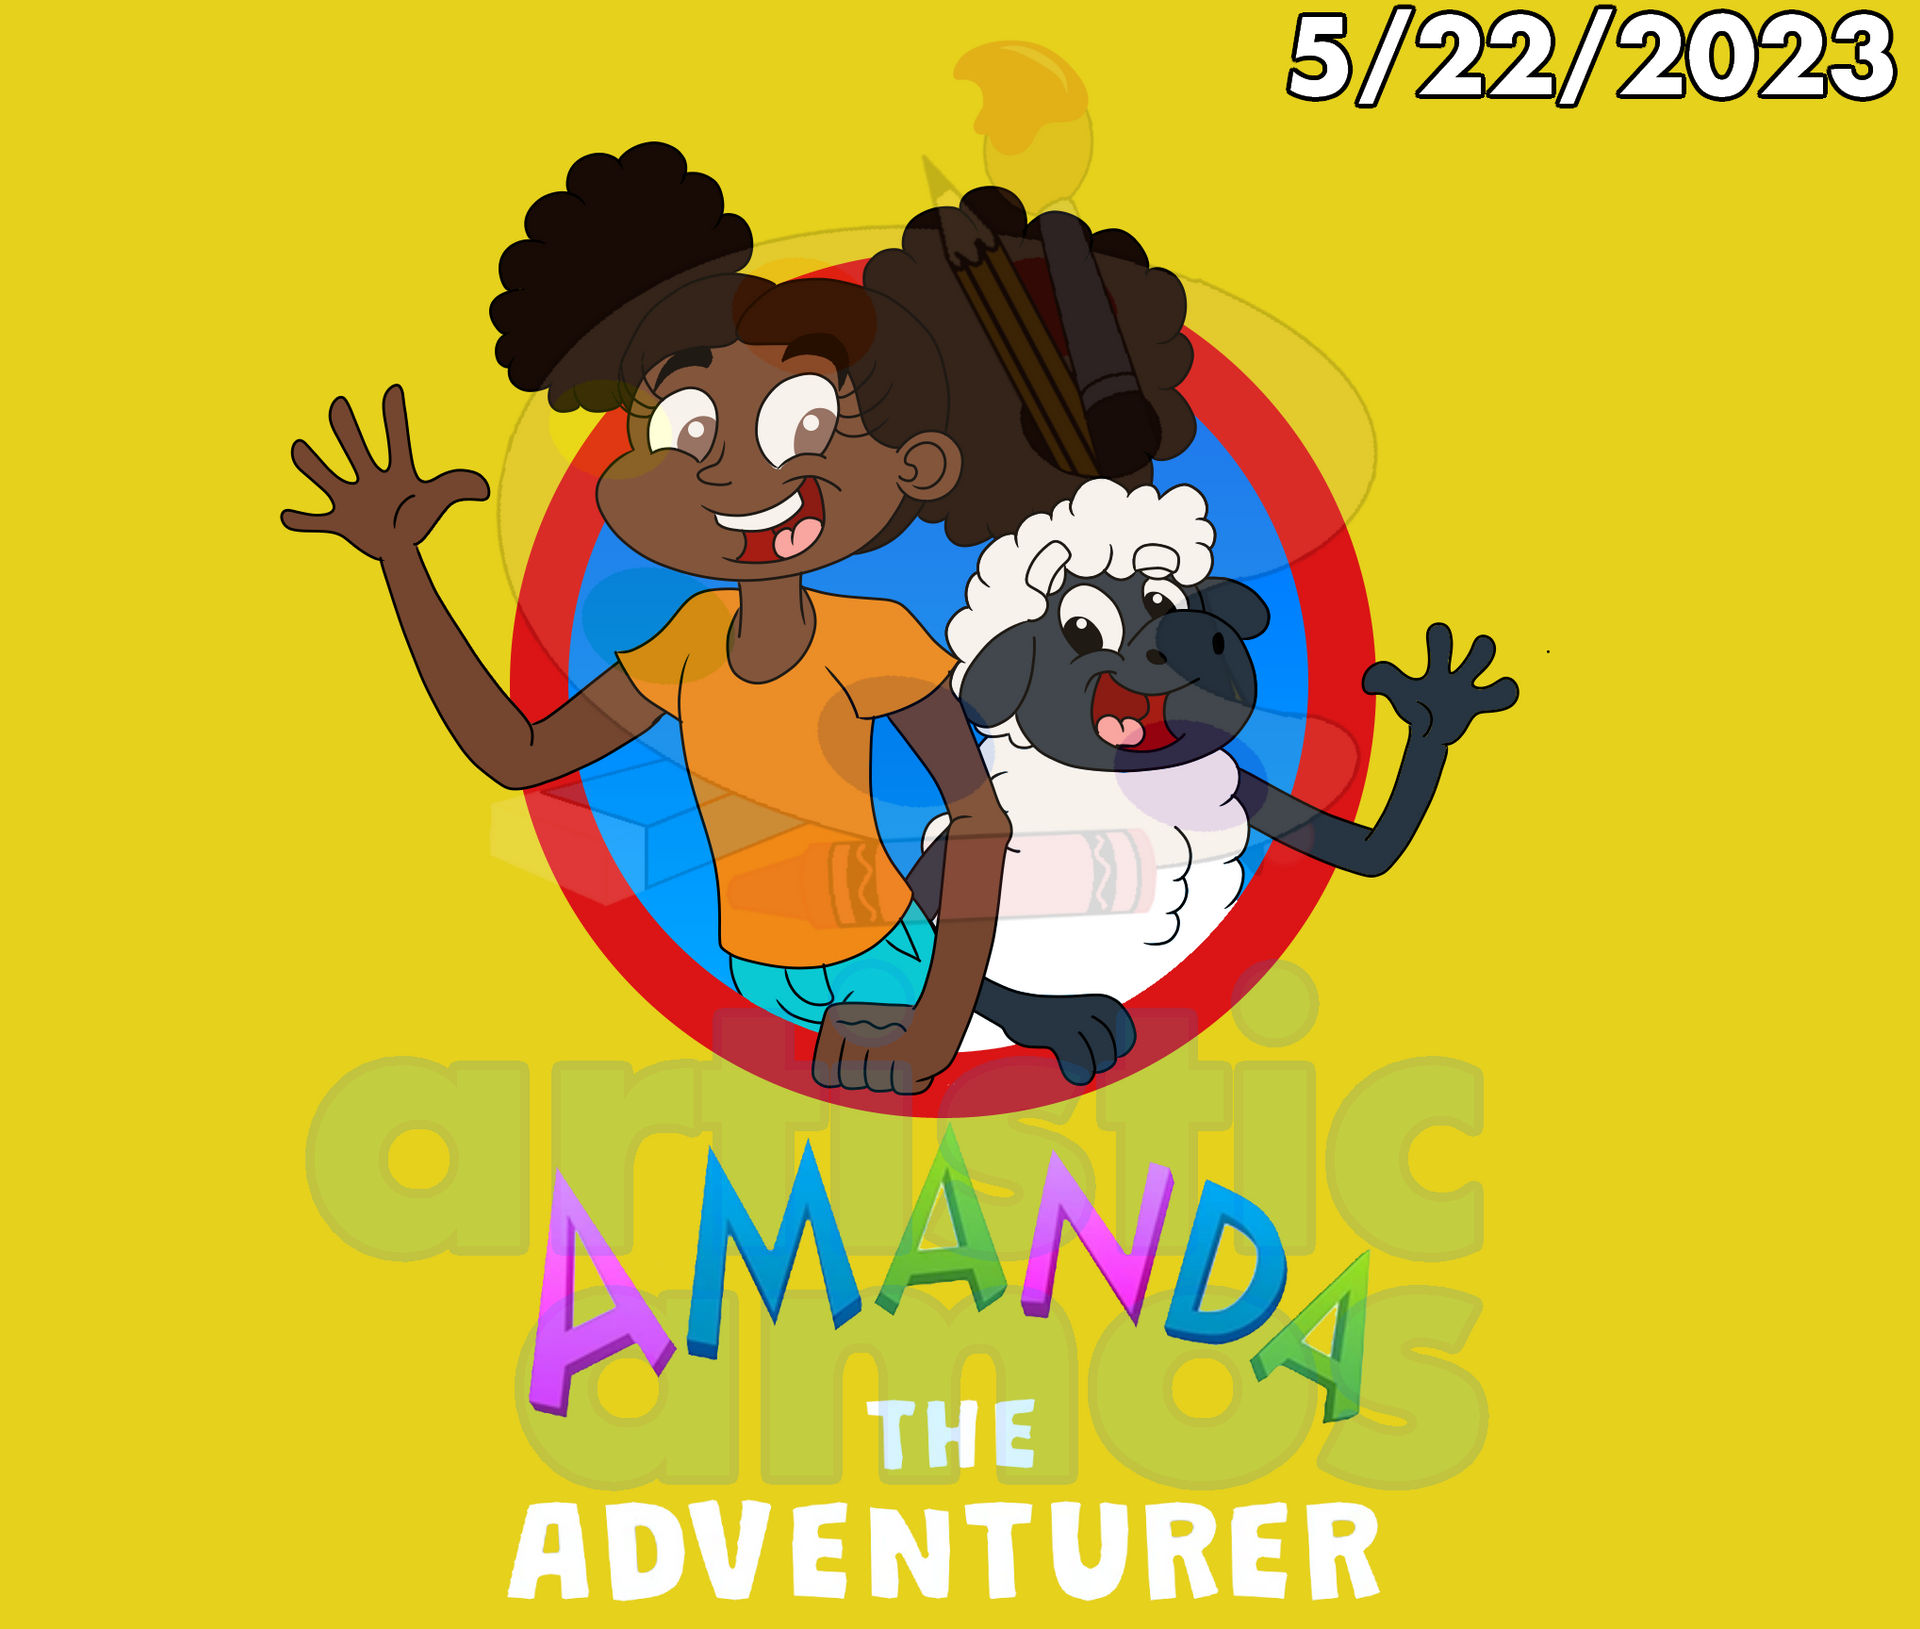 Amanda the adventurer ad : r/badads